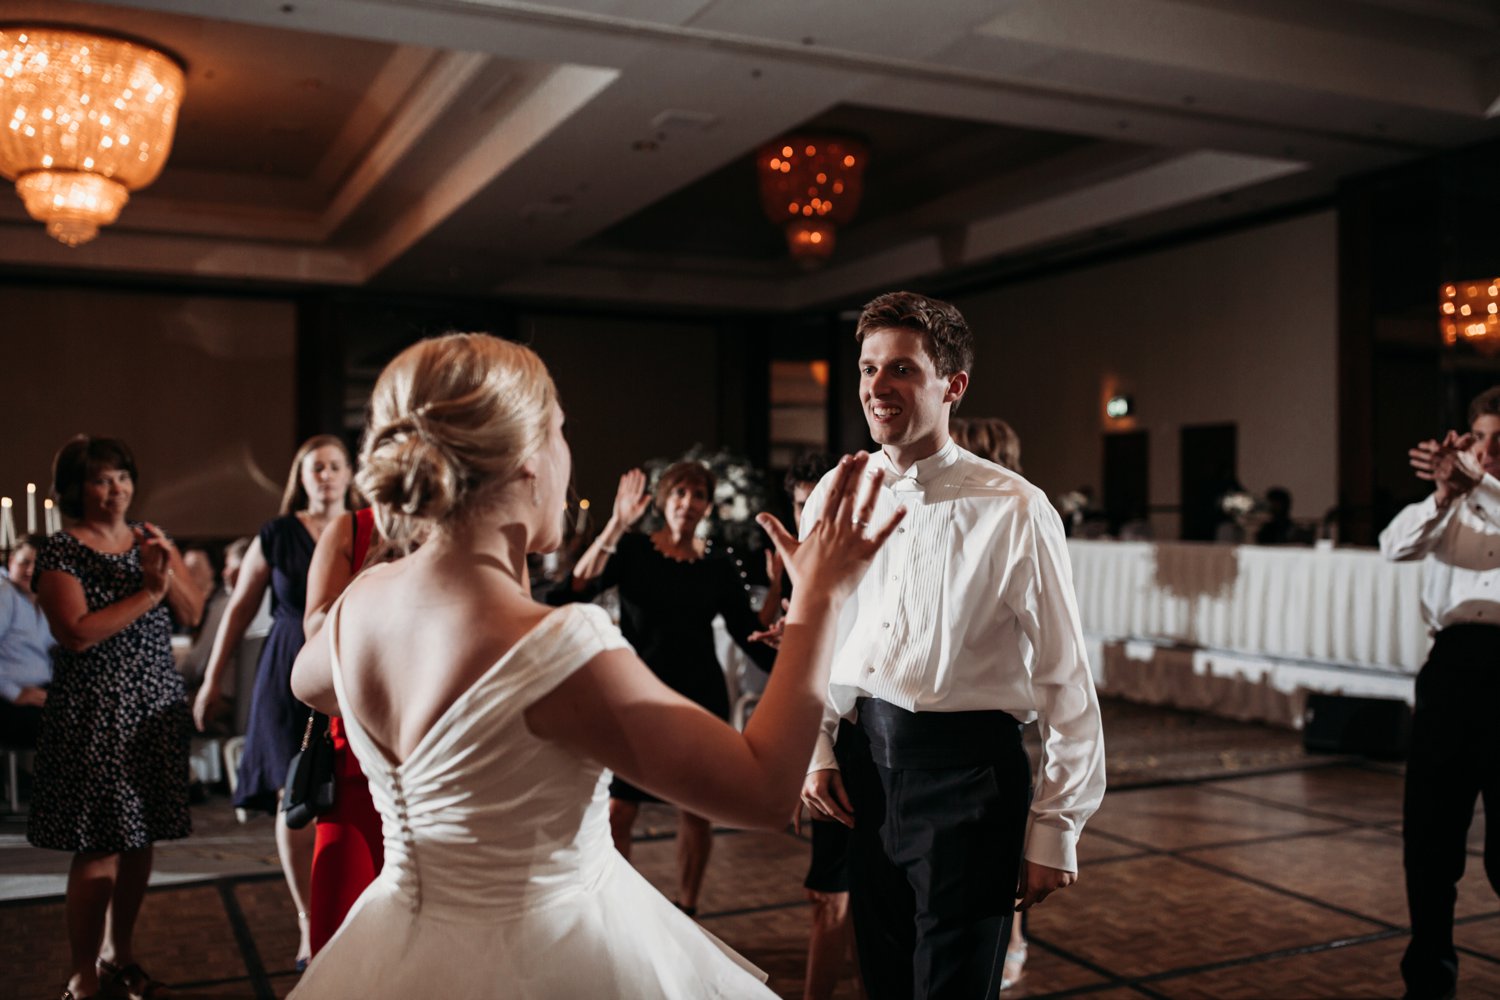   images by feliciathephotographer.com | destination wedding photographer | kansas city | summertime | classic | dance floor | party | dj lights | laughter | singing | bride and groom | romantic | true love | 